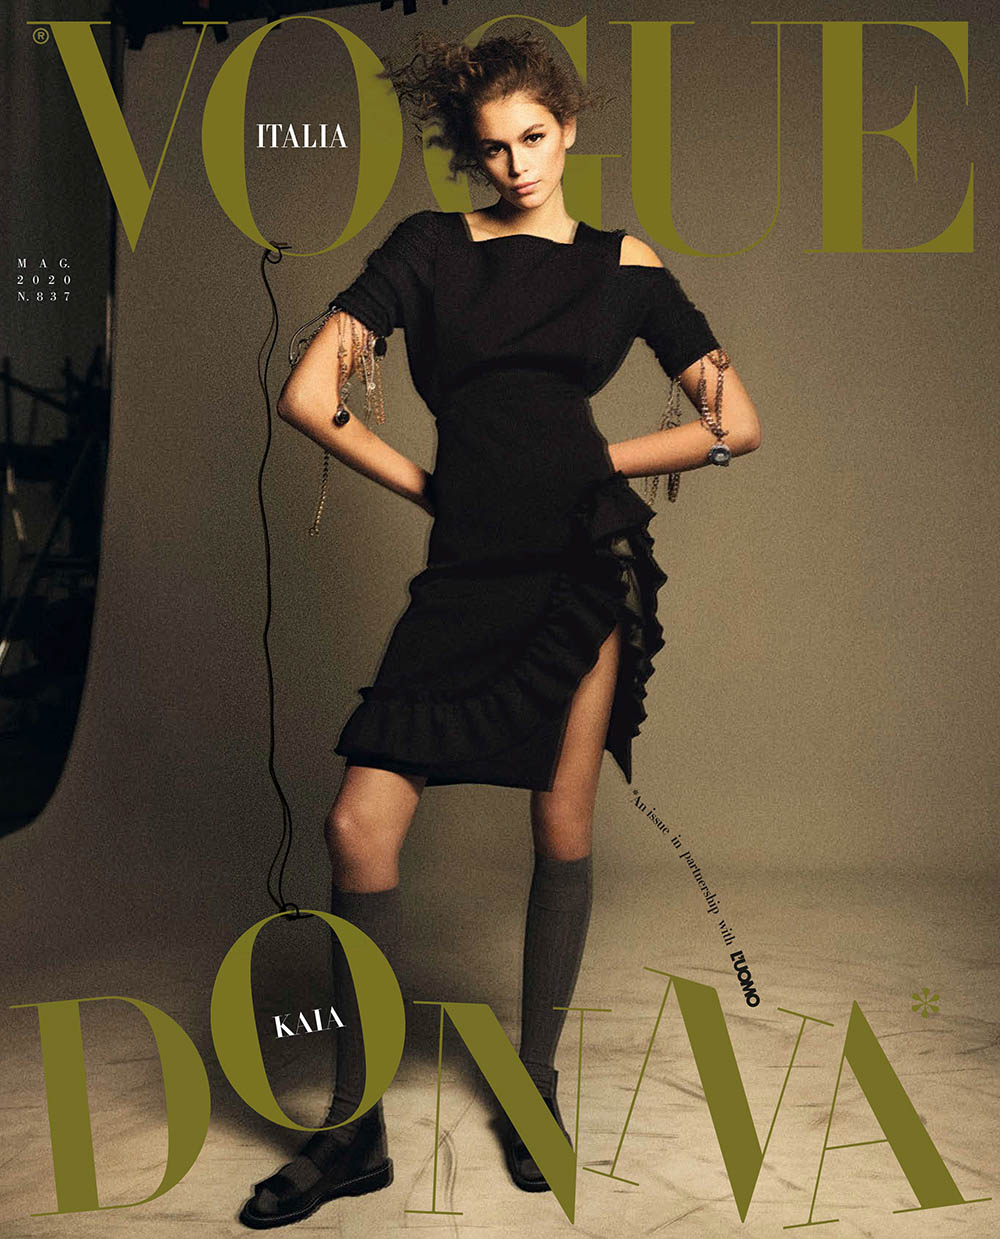 Kaia Gerber covers Vogue Italia and L’Uomo Vogue May 2020 by Karim Sadli